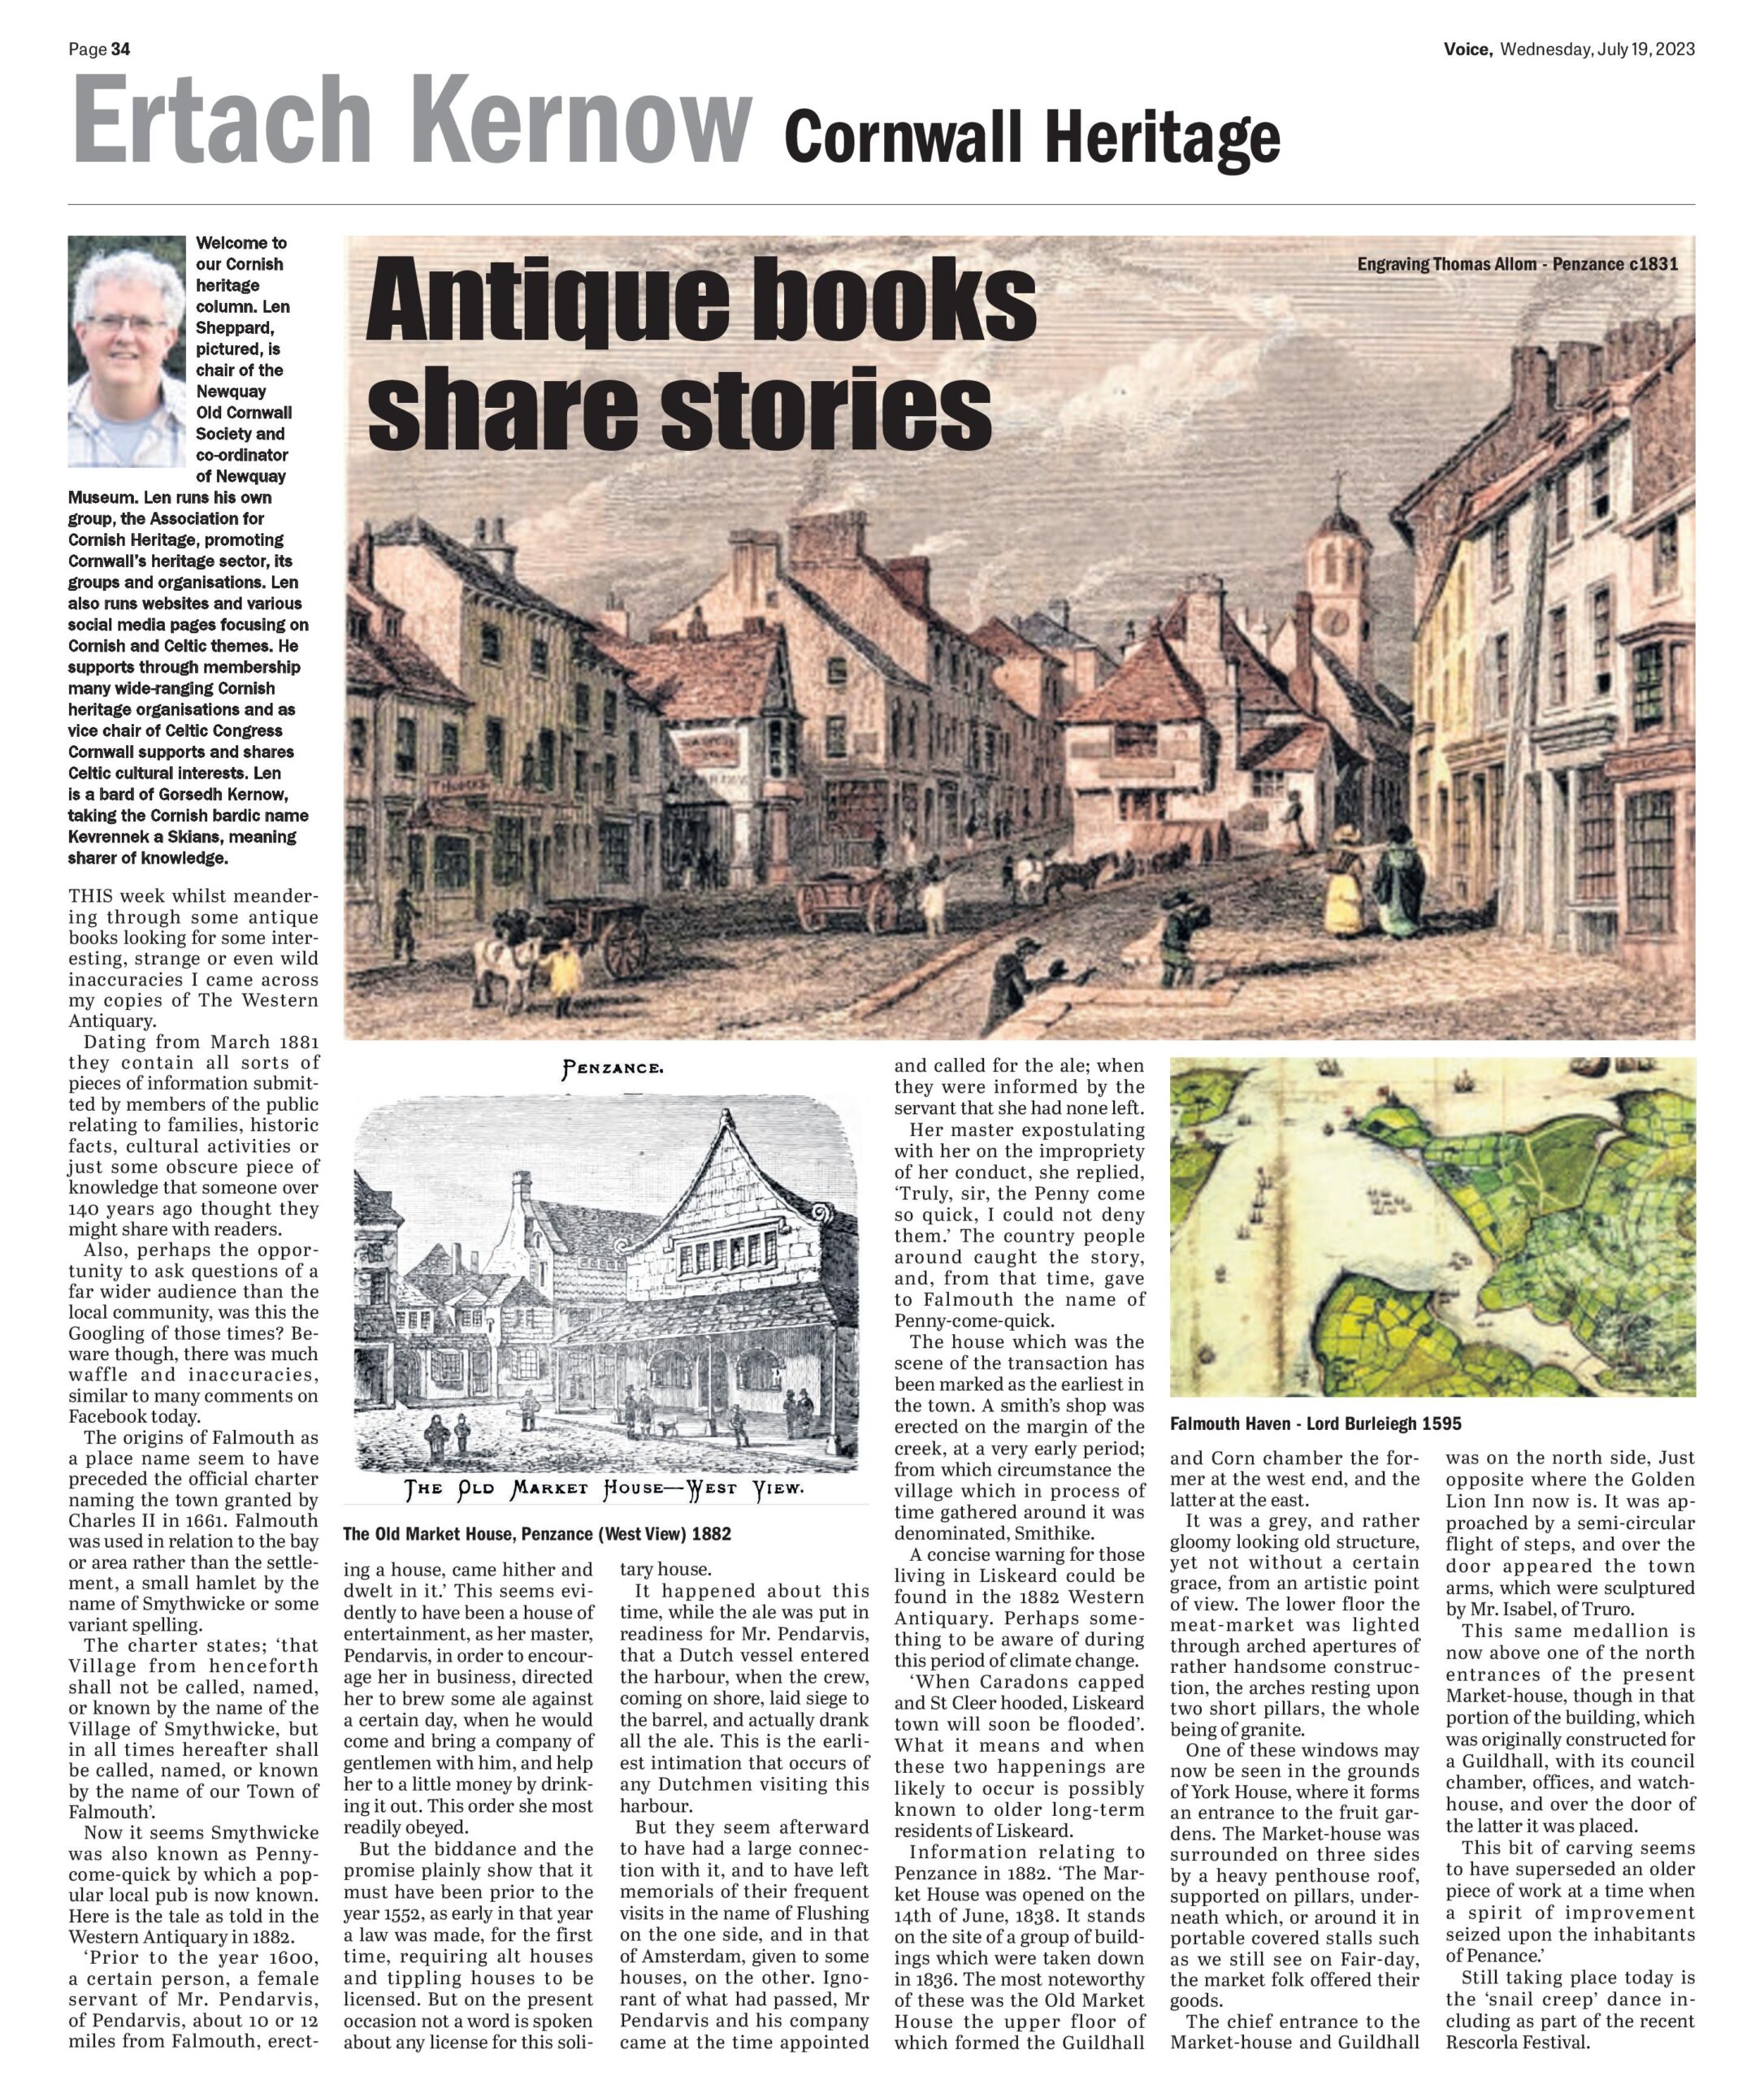 Ertach Kernow - Antique books share stories